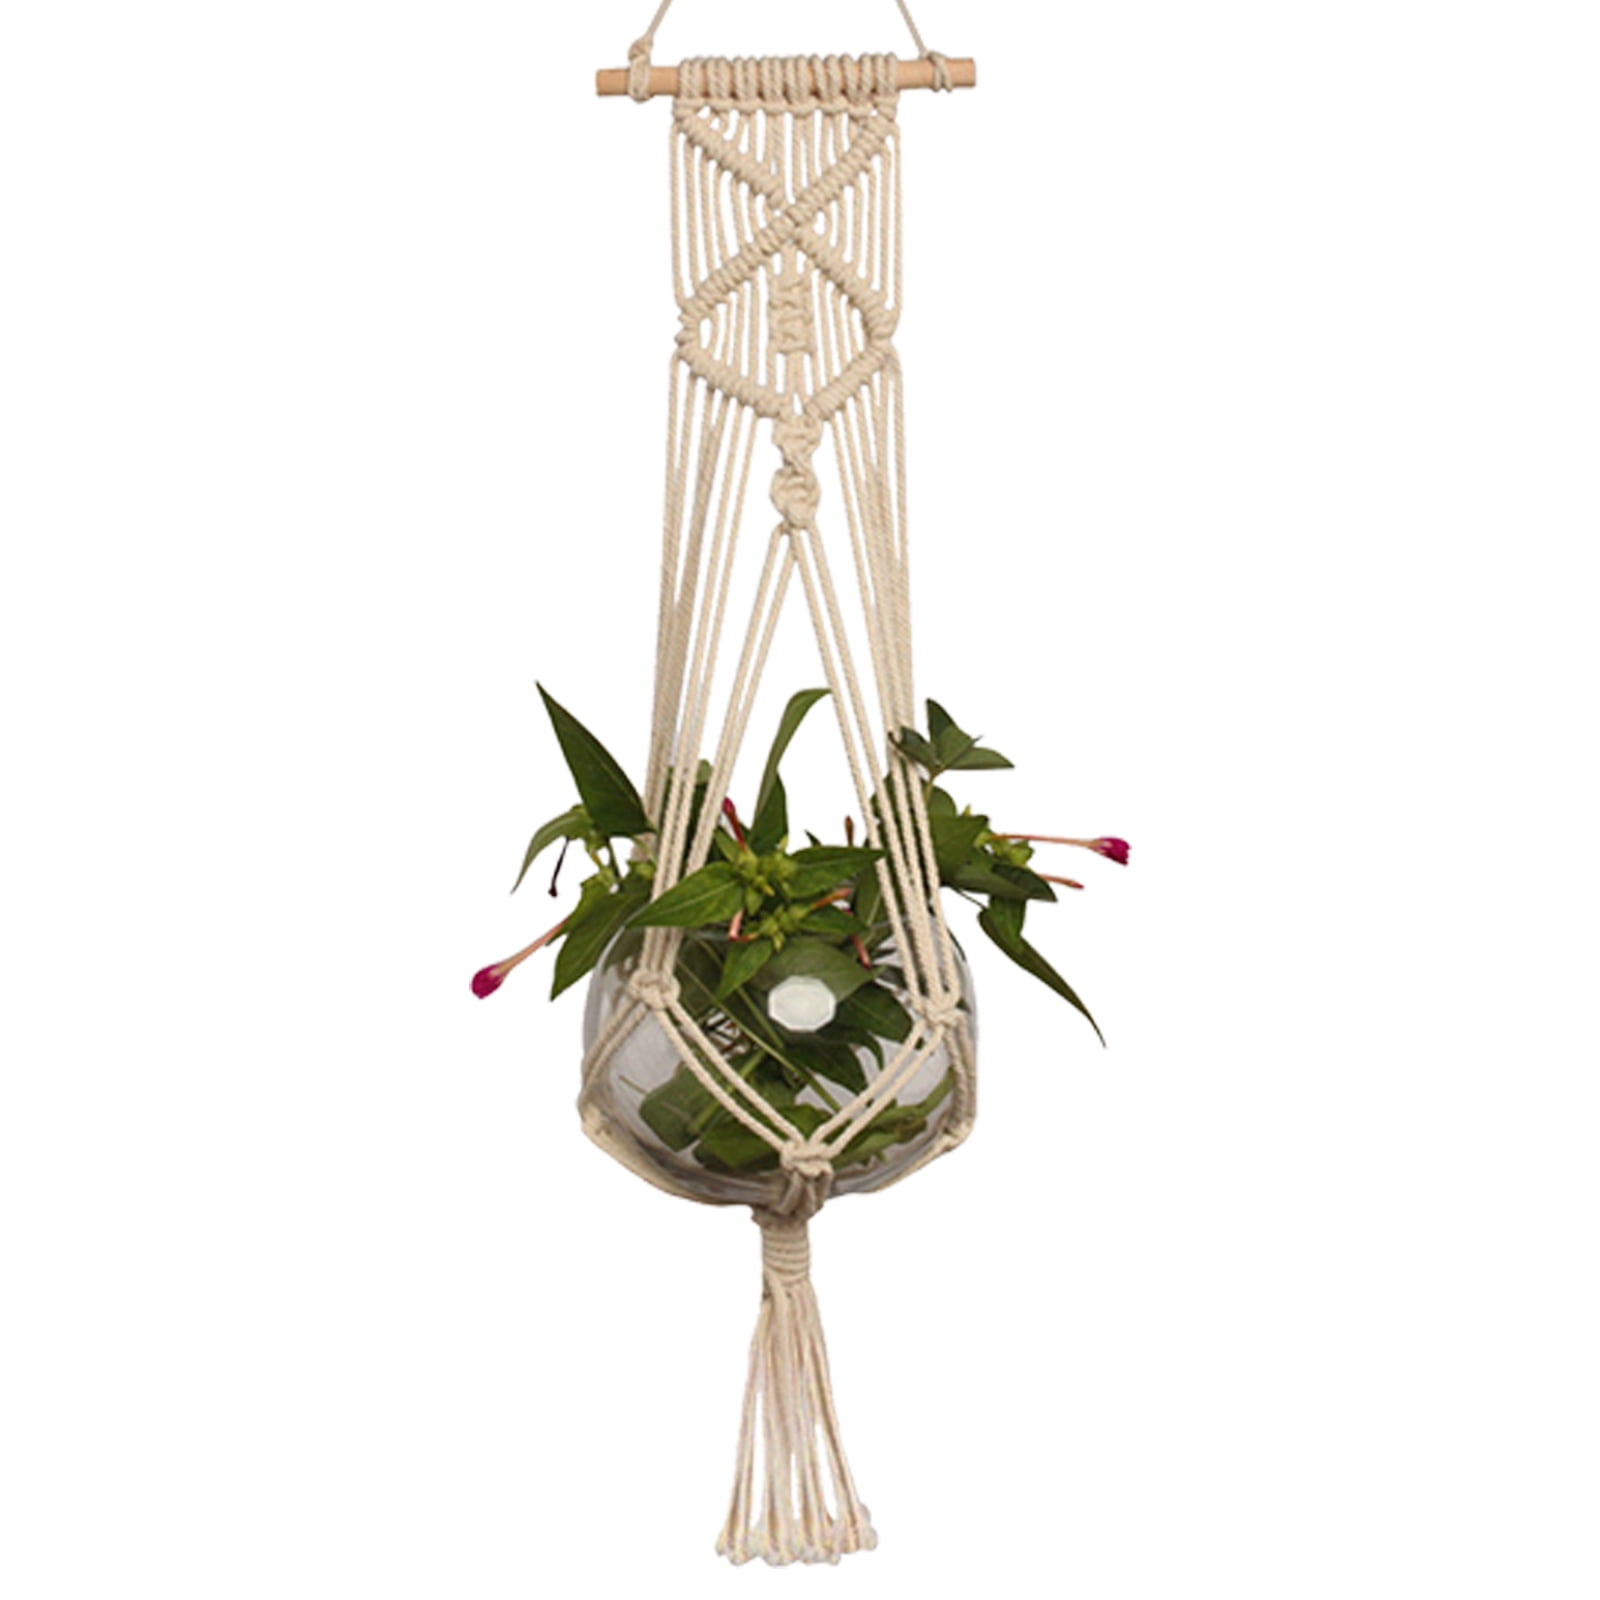 Pot holder macrame plant hanger hanging planter basket jute braided rope craA*ca